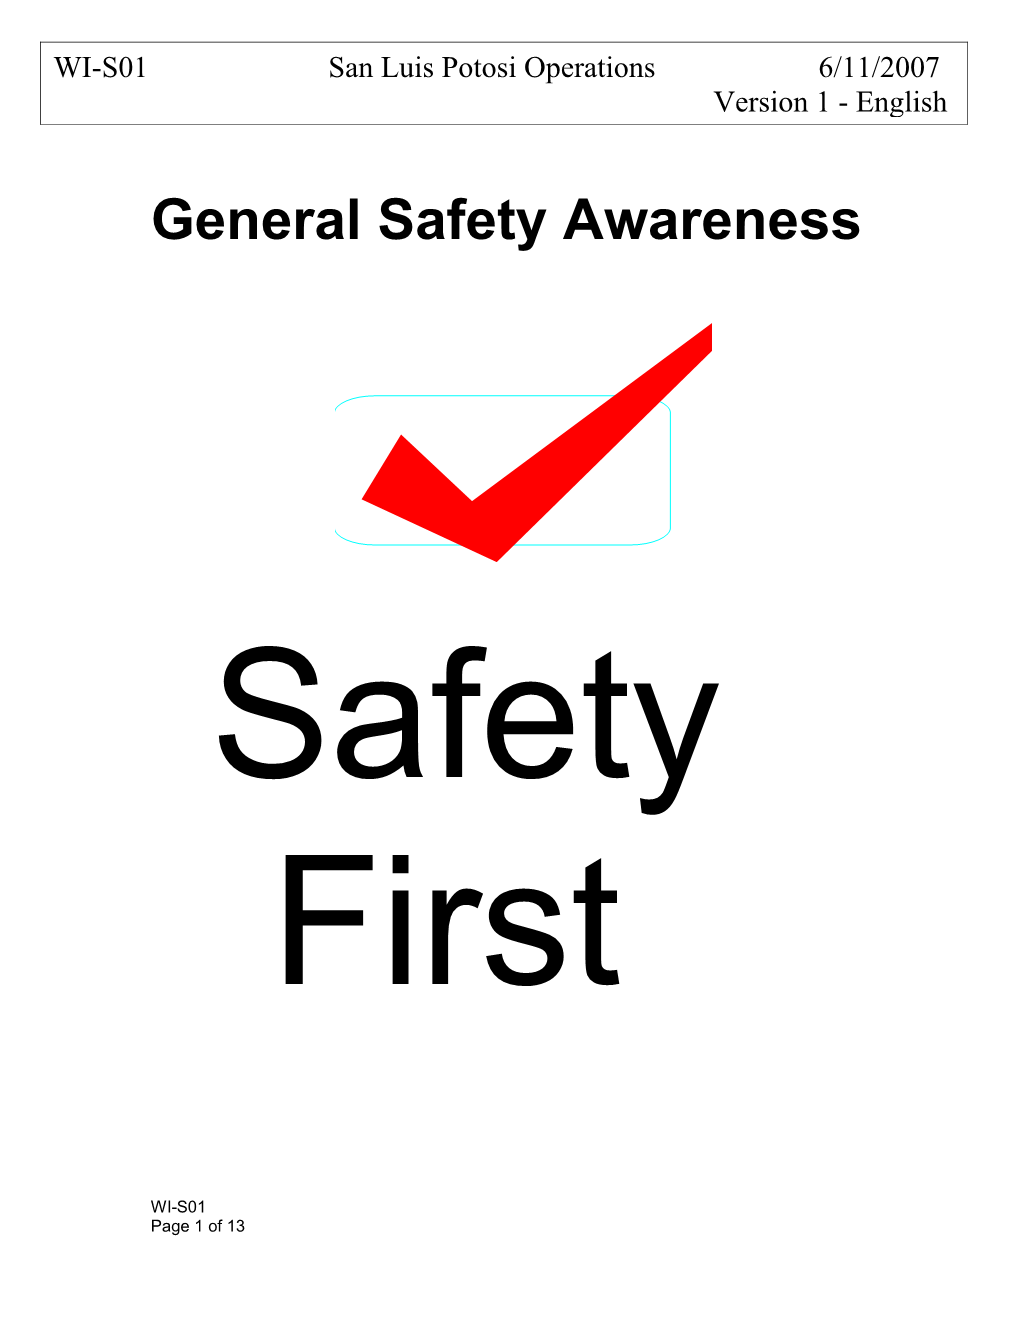 General Safety Awareness